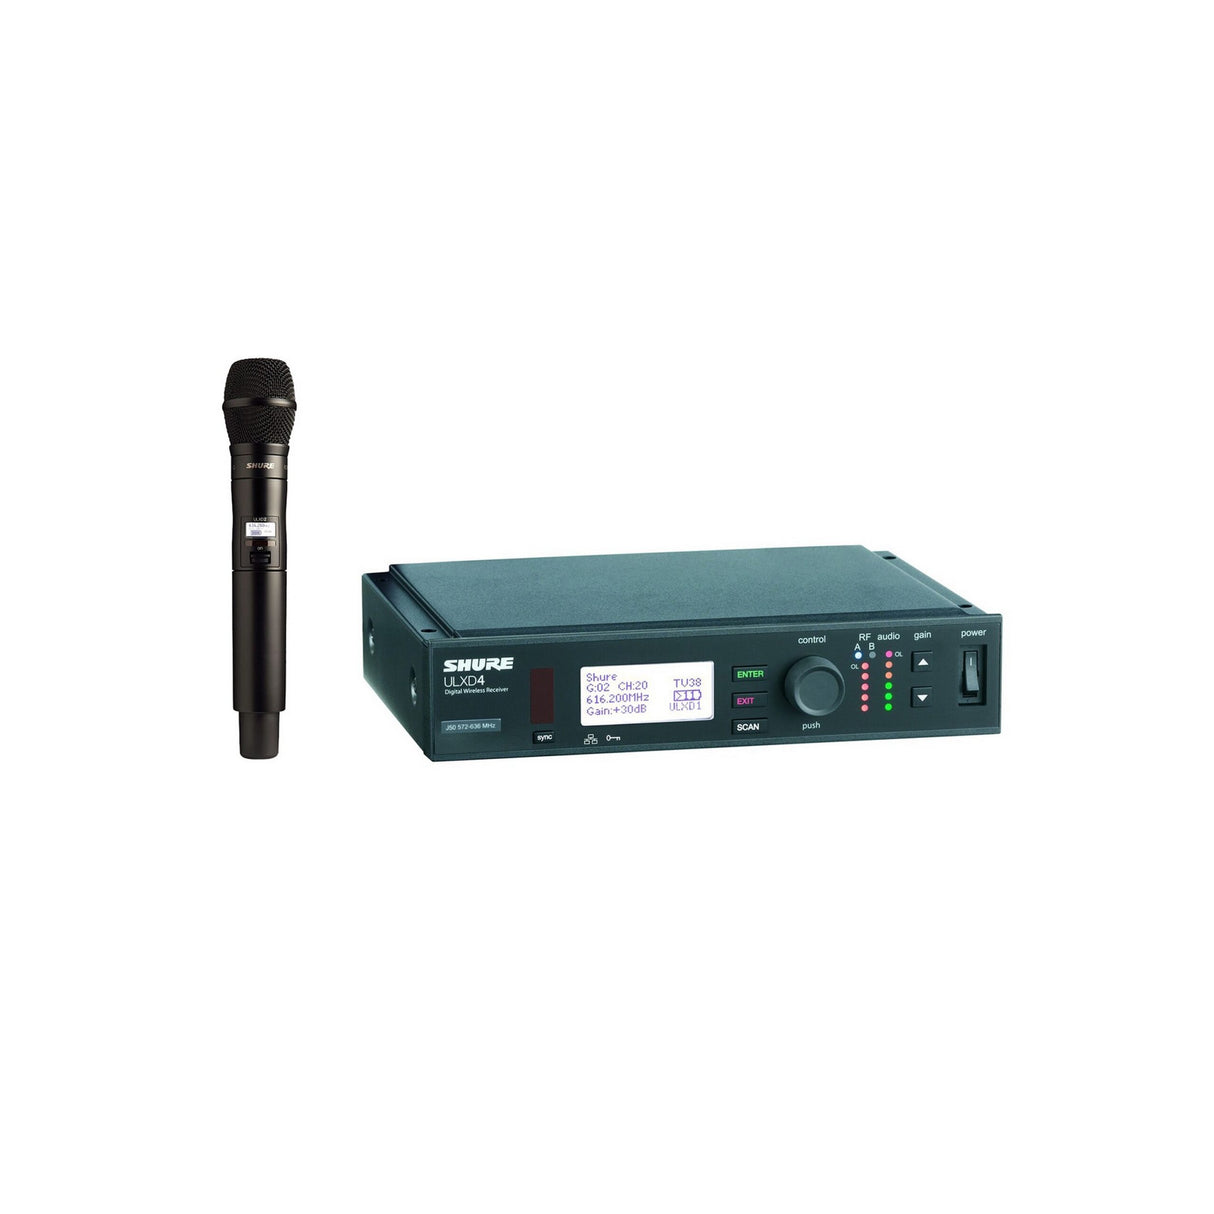 Shure ULXD24/KSM9HS Handheld Wireless Microphone System, H50 534-598 MHz